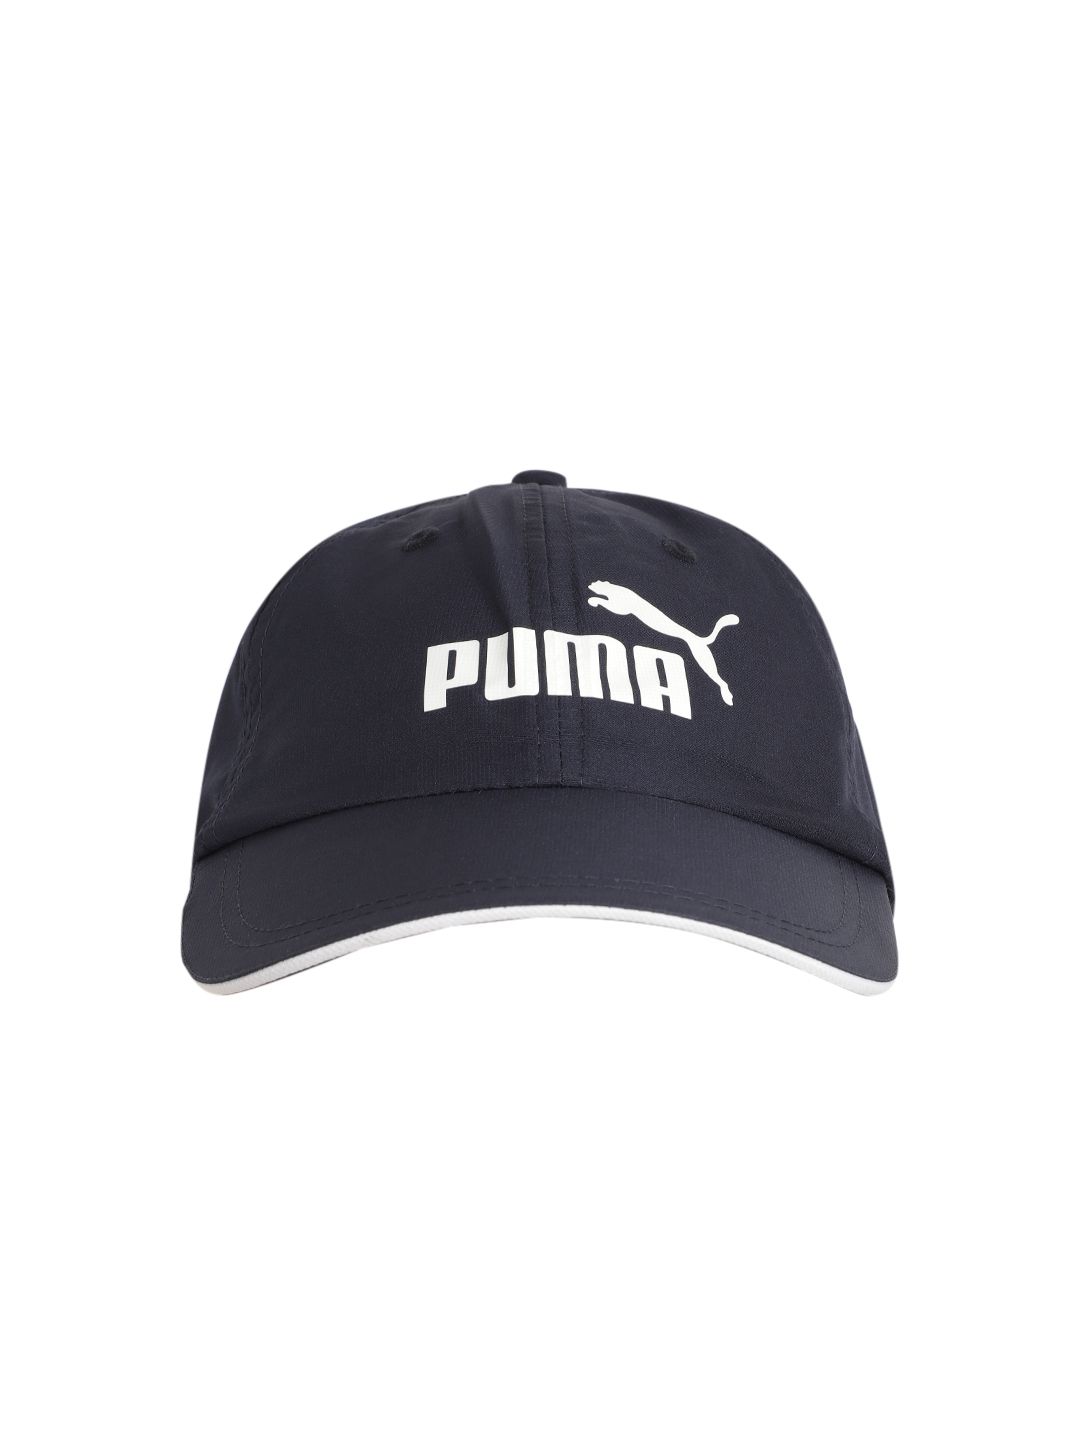 Puma Unisex Navy Blue & White Brand Logo Print Performance Visor Cap Price in India